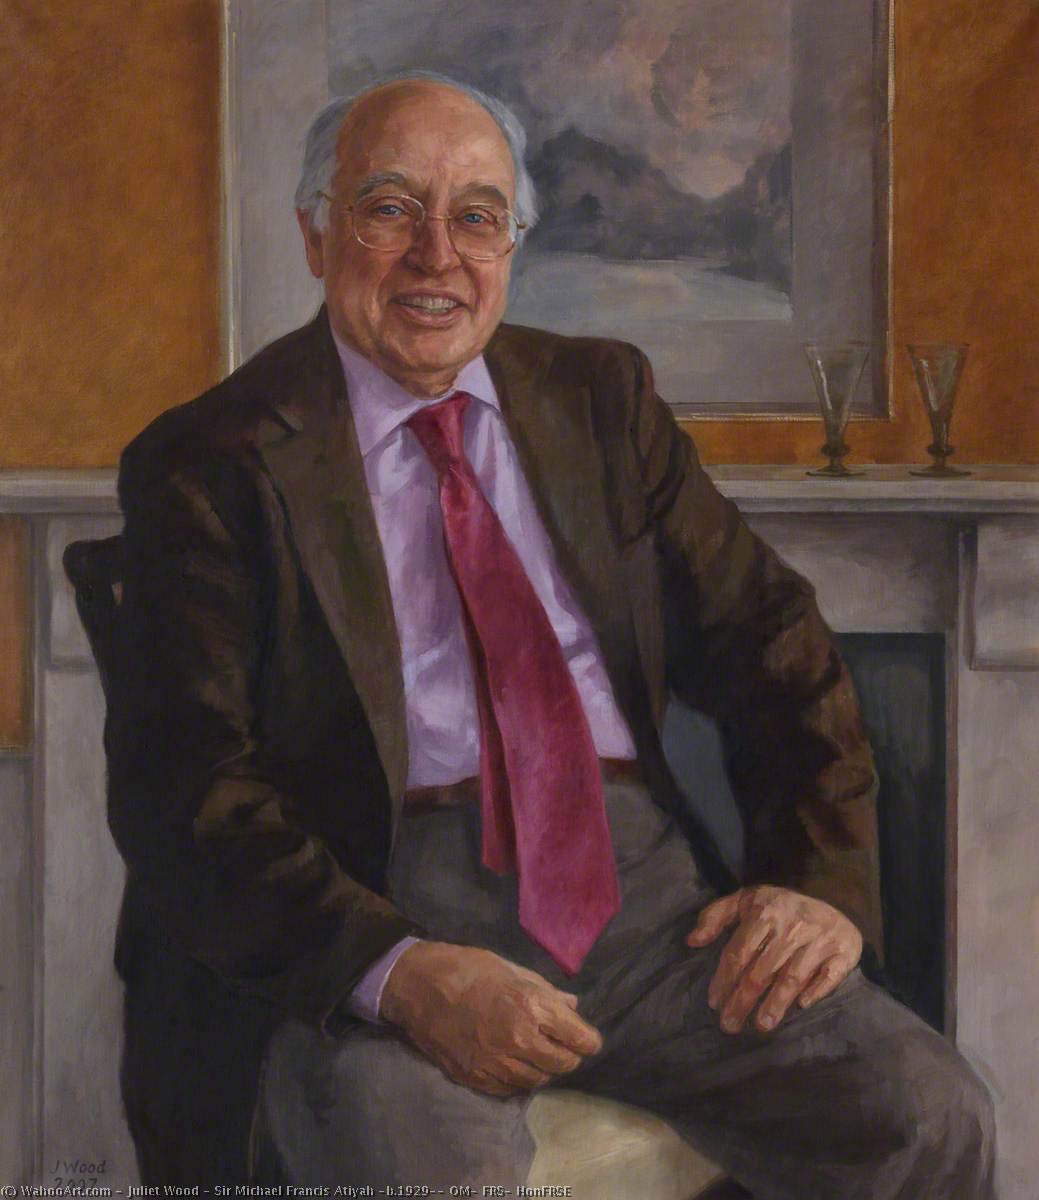 Sir Michael Francis Atiyah (b.1929), OM, FRS, HonFRSE, 2007 by Juliet Wood Juliet Wood | ArtsDot.com